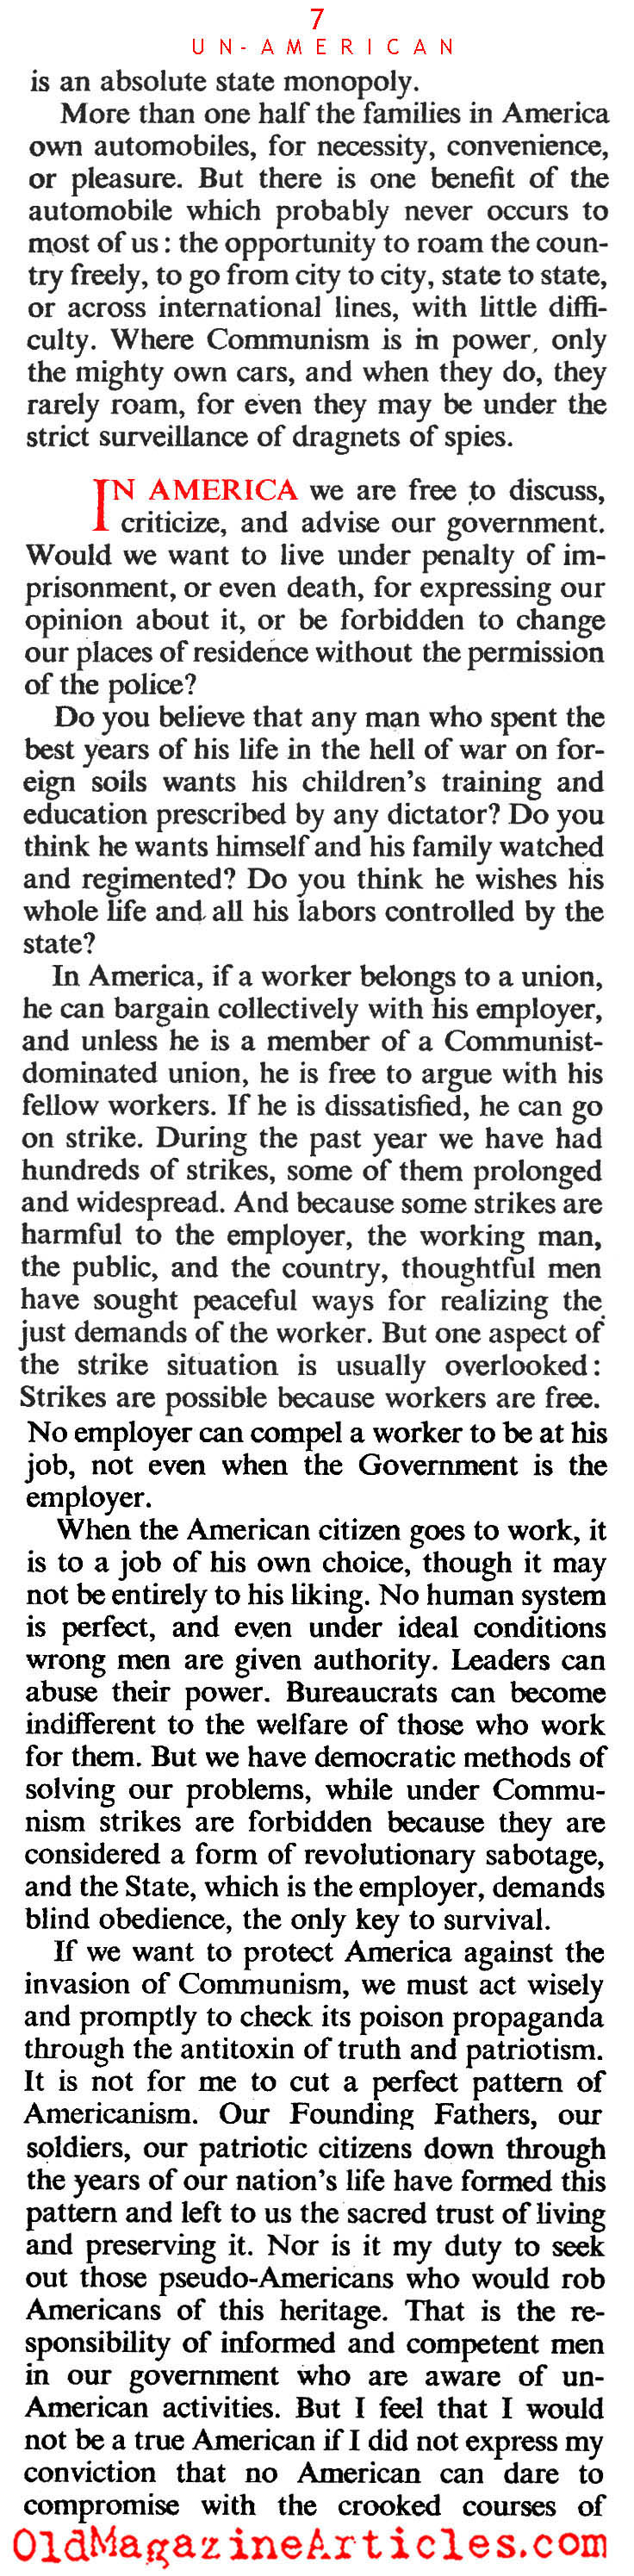 Un-Americanism  (The American Magazine, 1946)